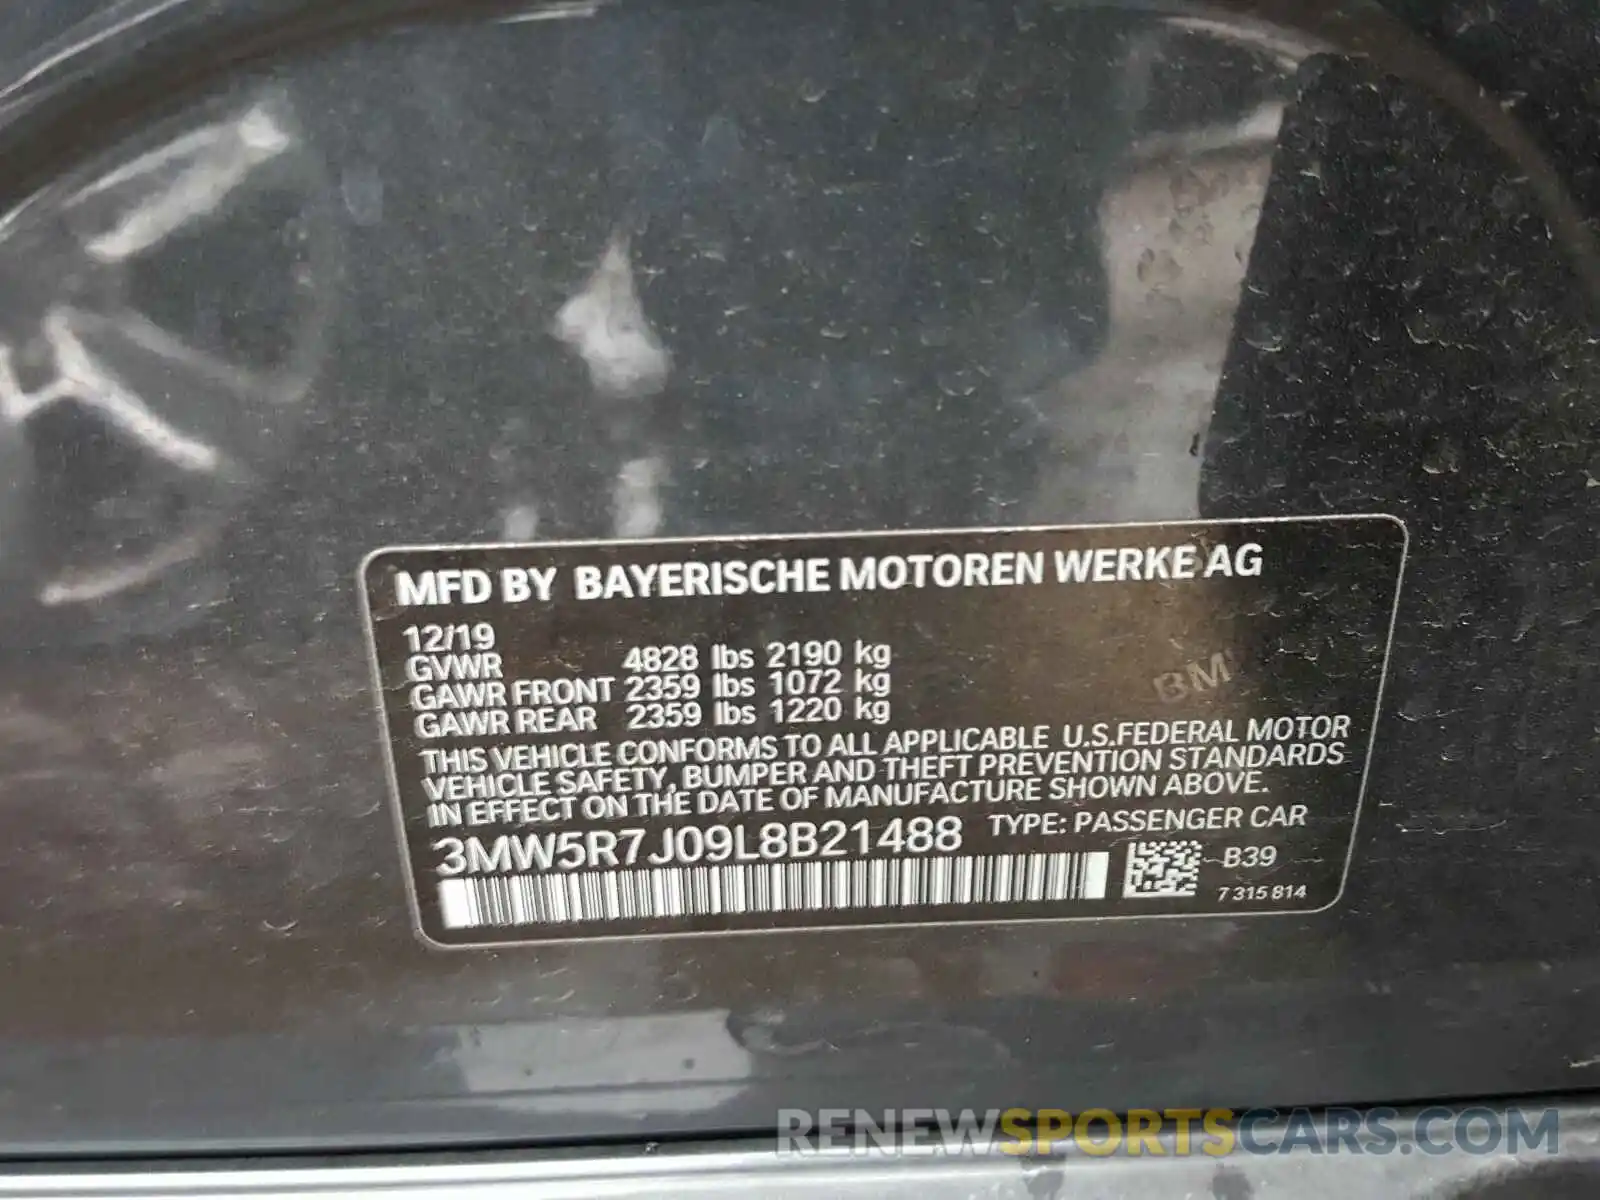 10 Photograph of a damaged car 3MW5R7J09L8B21488 BMW 3 SERIES 2020